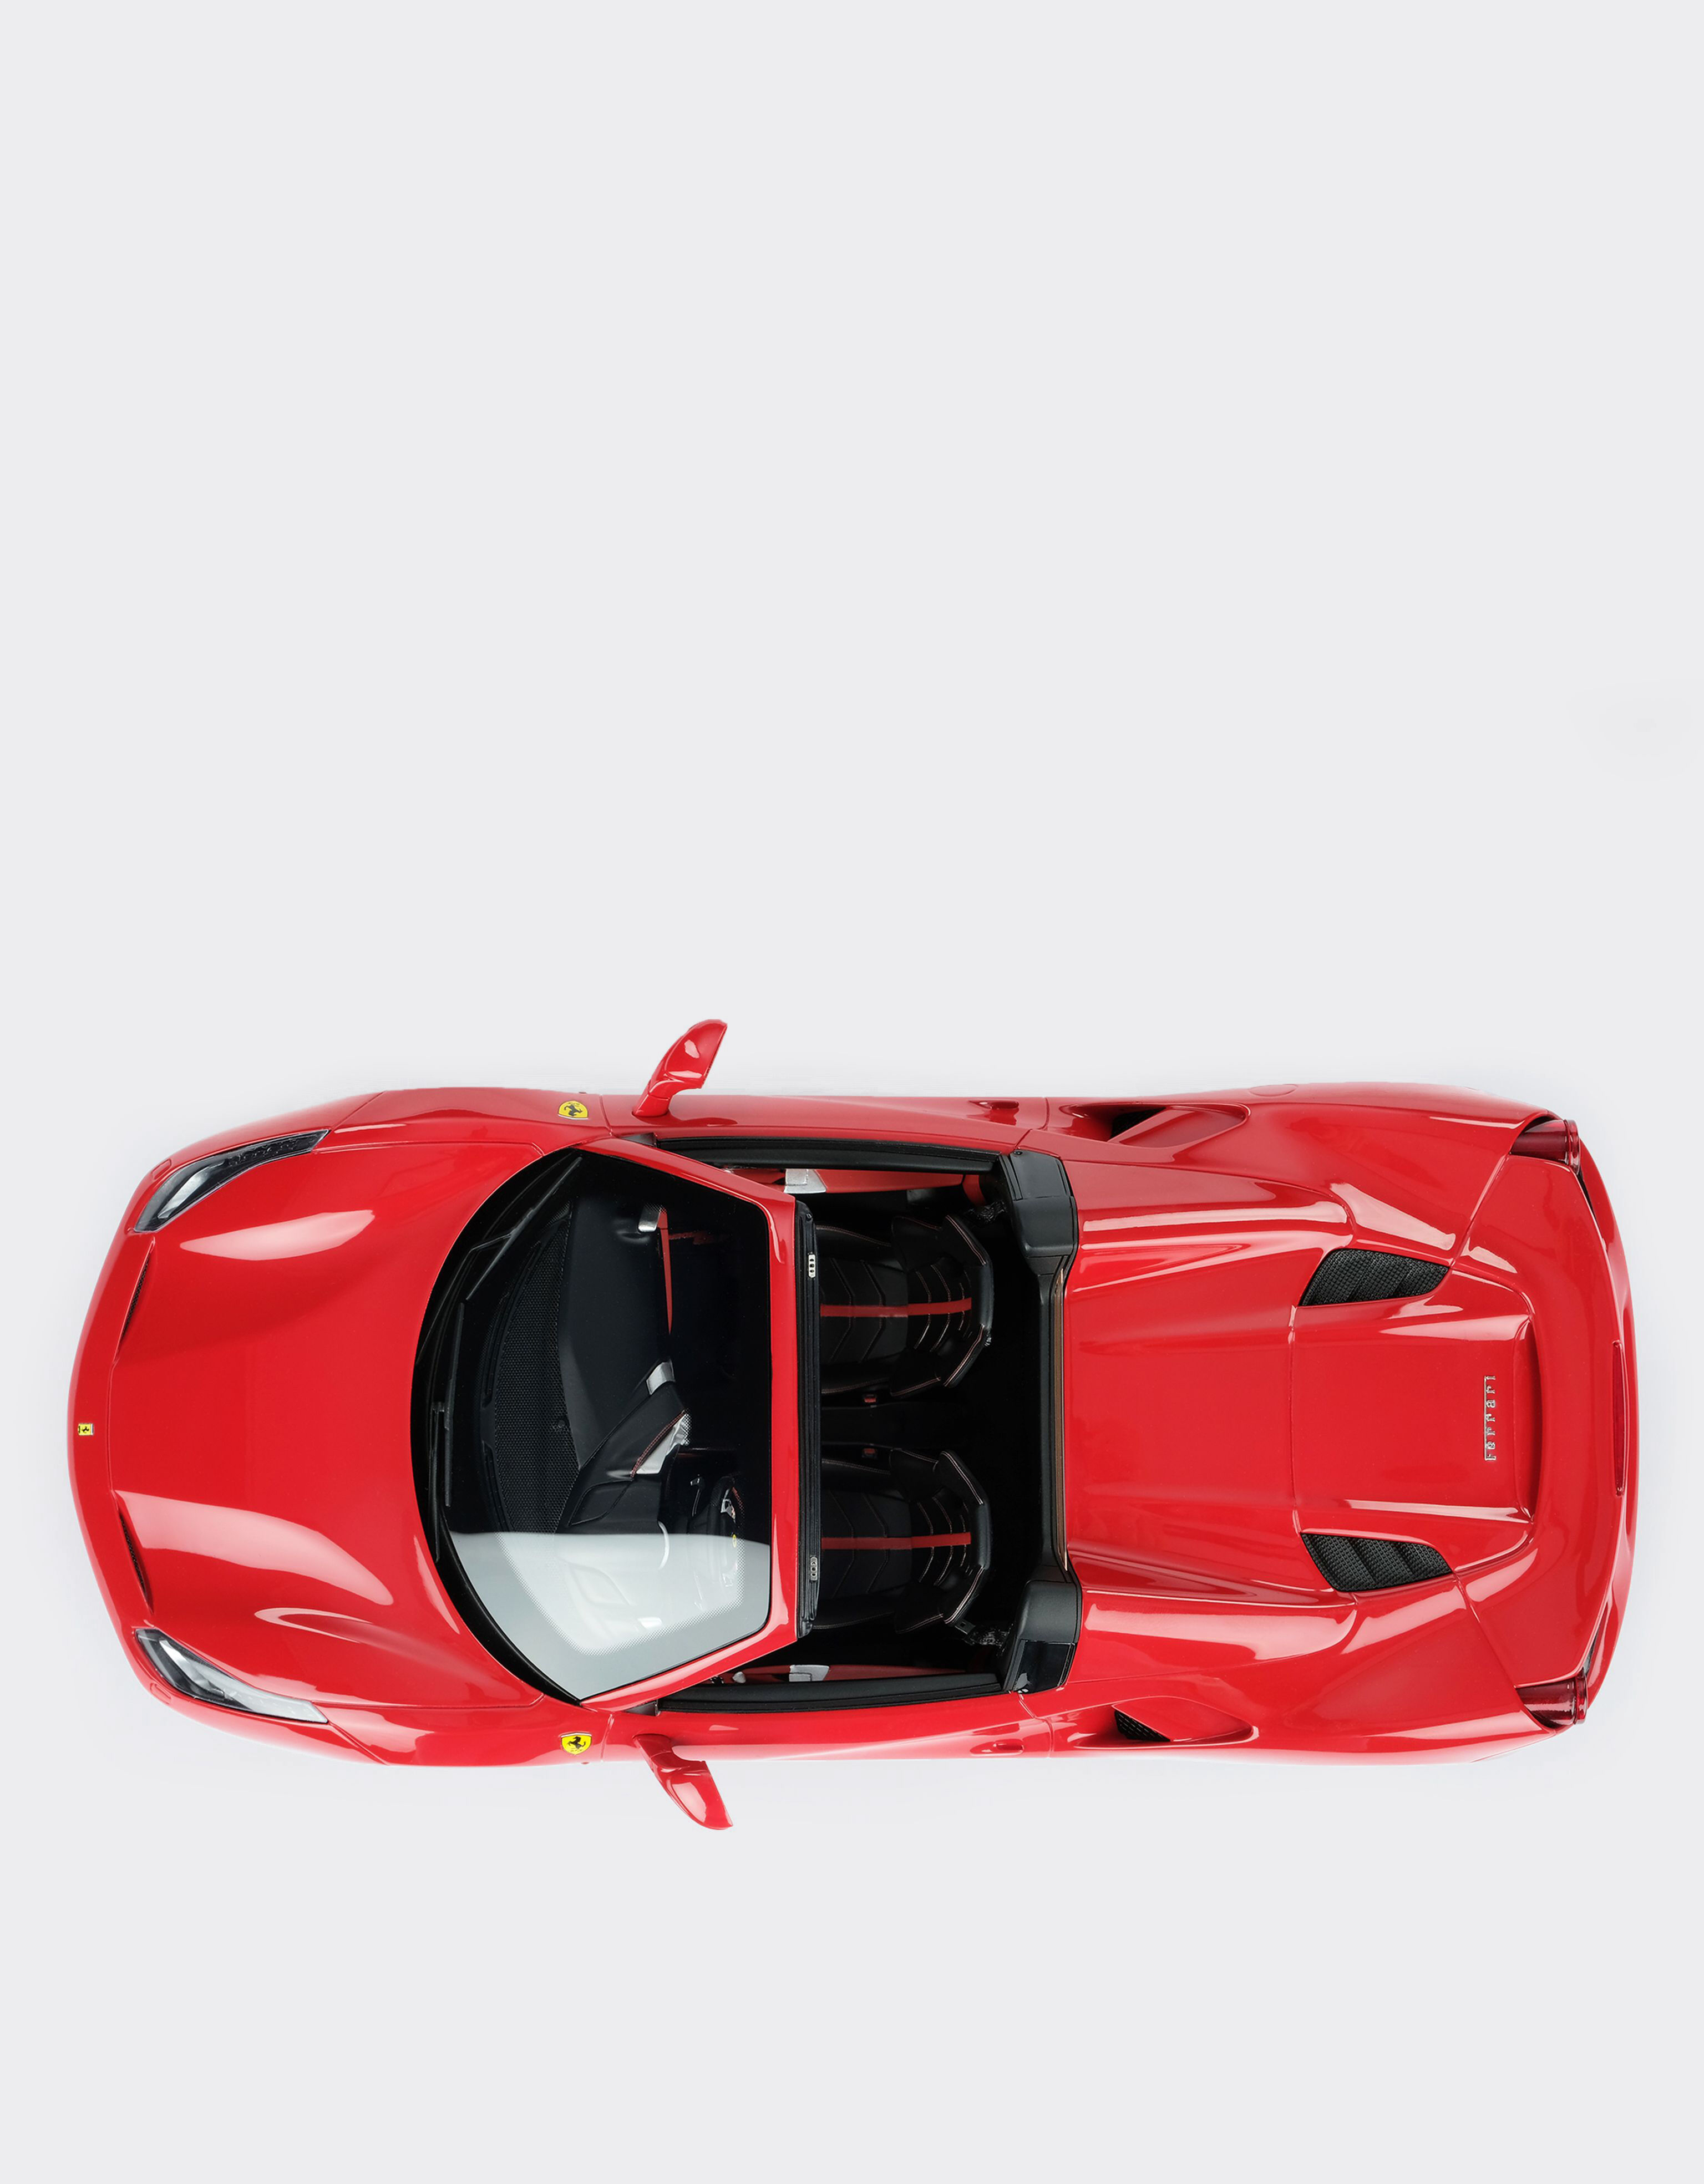 Ferrari Modellauto Ferrari 488 Spider im Maßstab 1:18 Rot L7598f